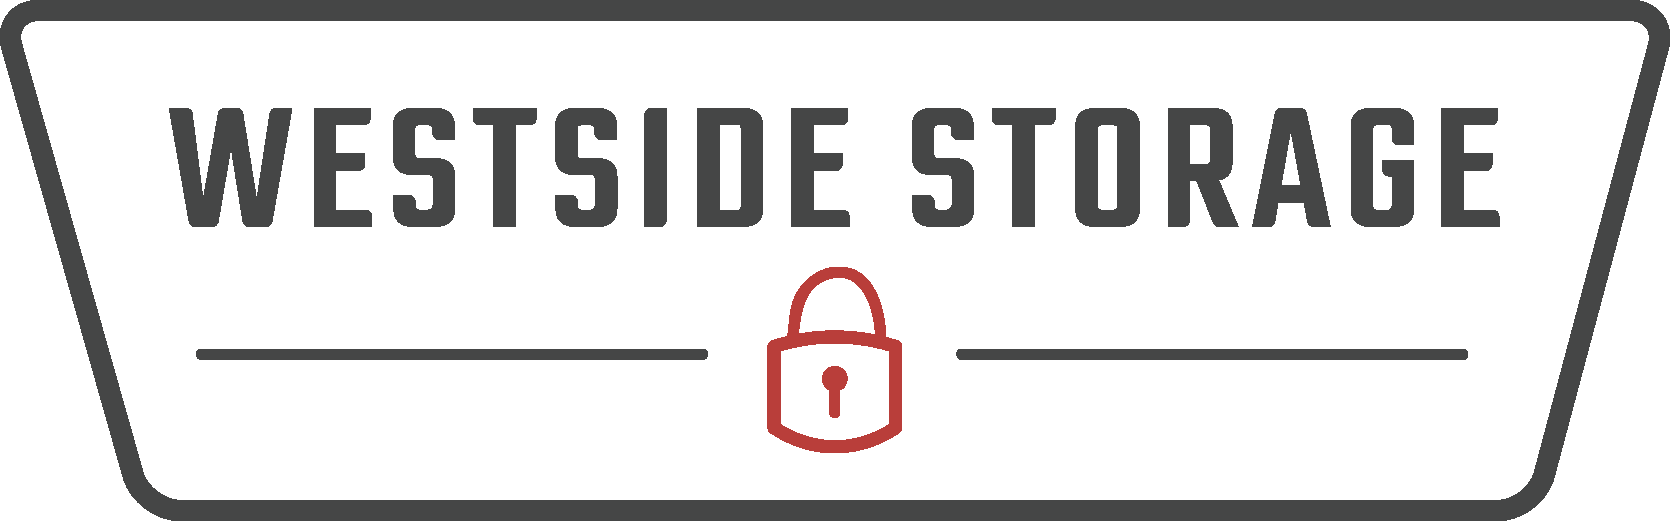 Logo for Westside Storage, click to go home